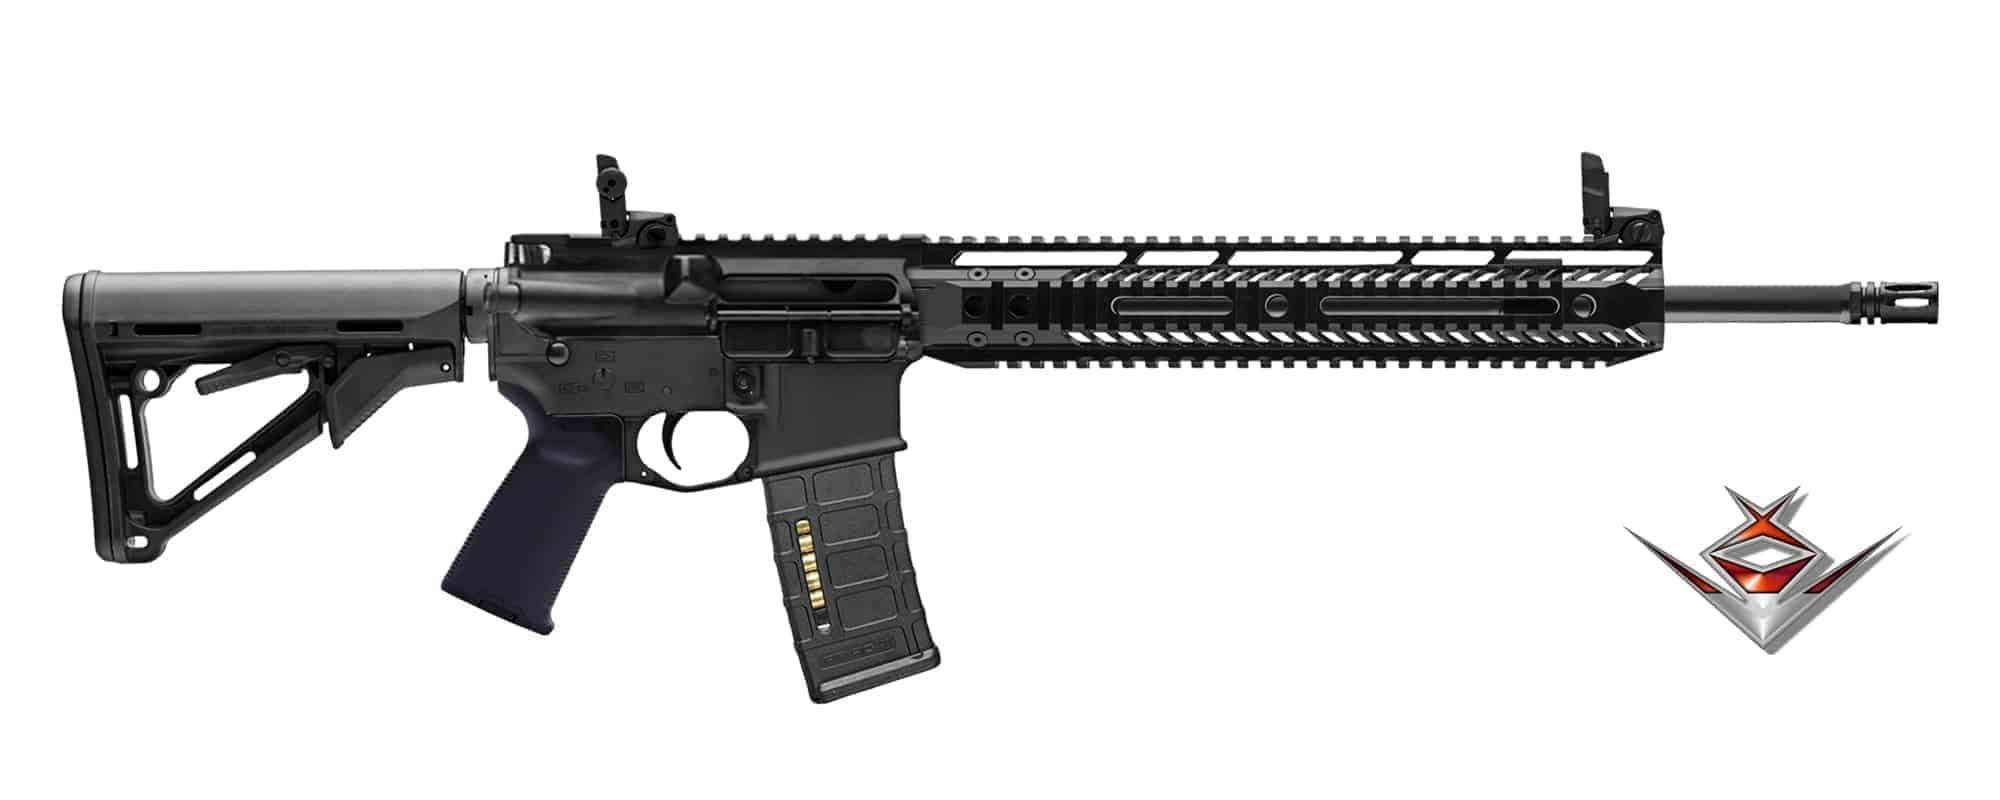 16" Midlength Rifle With GPR 12" Rail